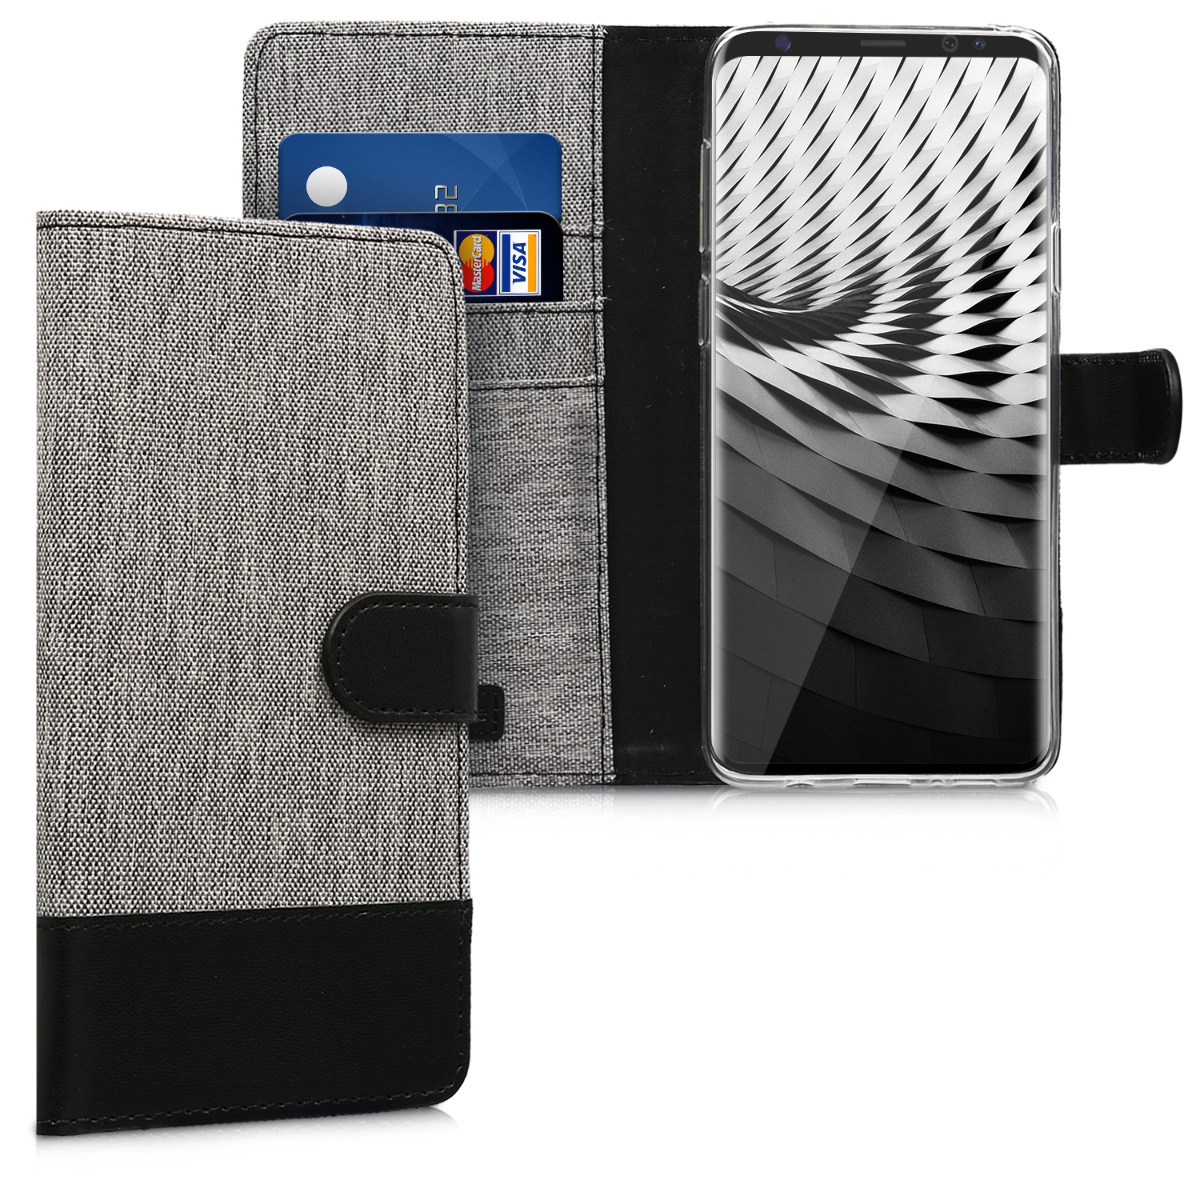 Fabricpouzdro pro Samsung S9 Plus - šedé / černé